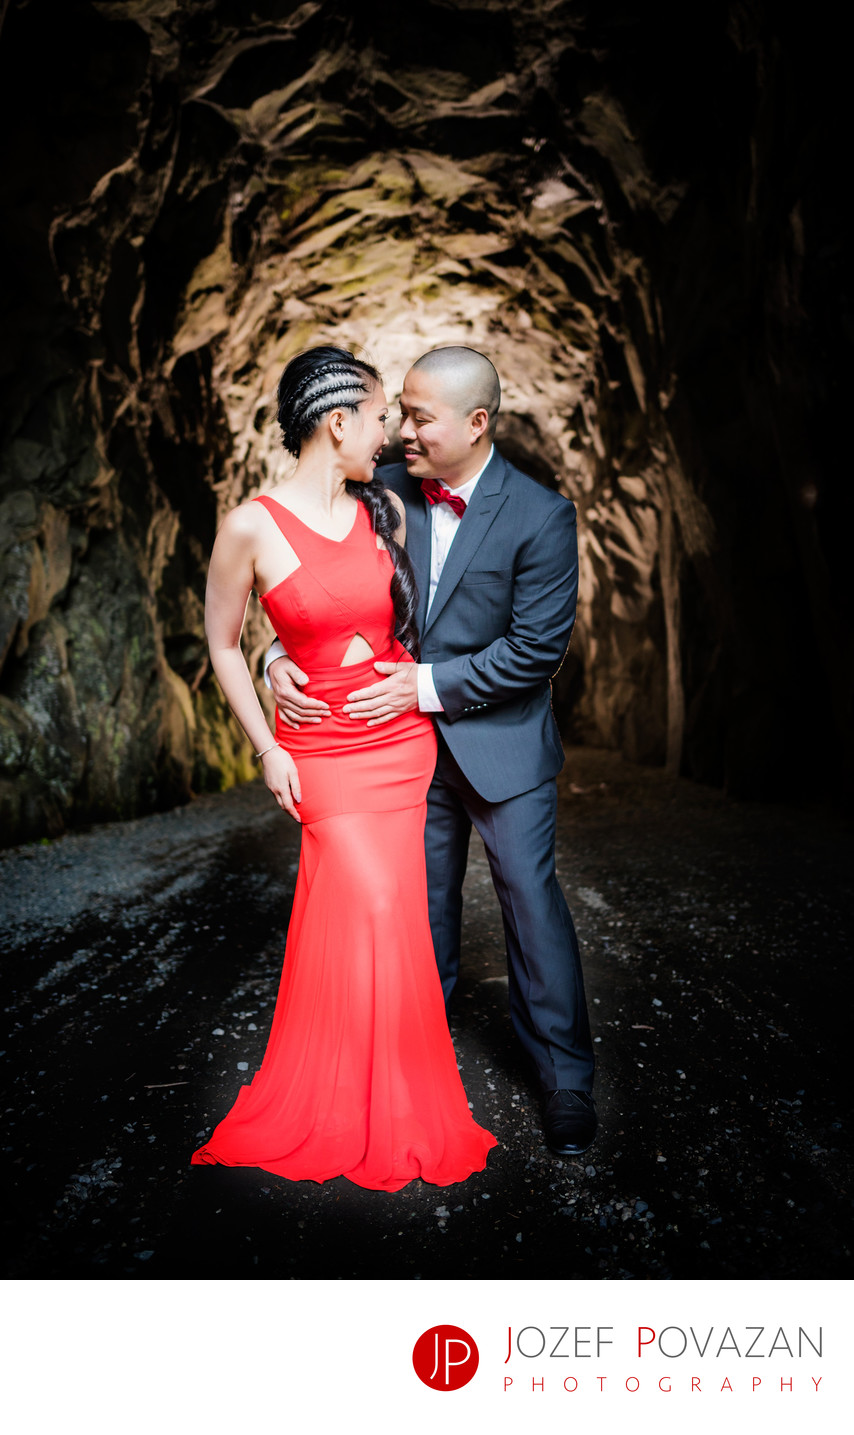 Othello Tunnels Wedding Photographer Dramatic Portraits